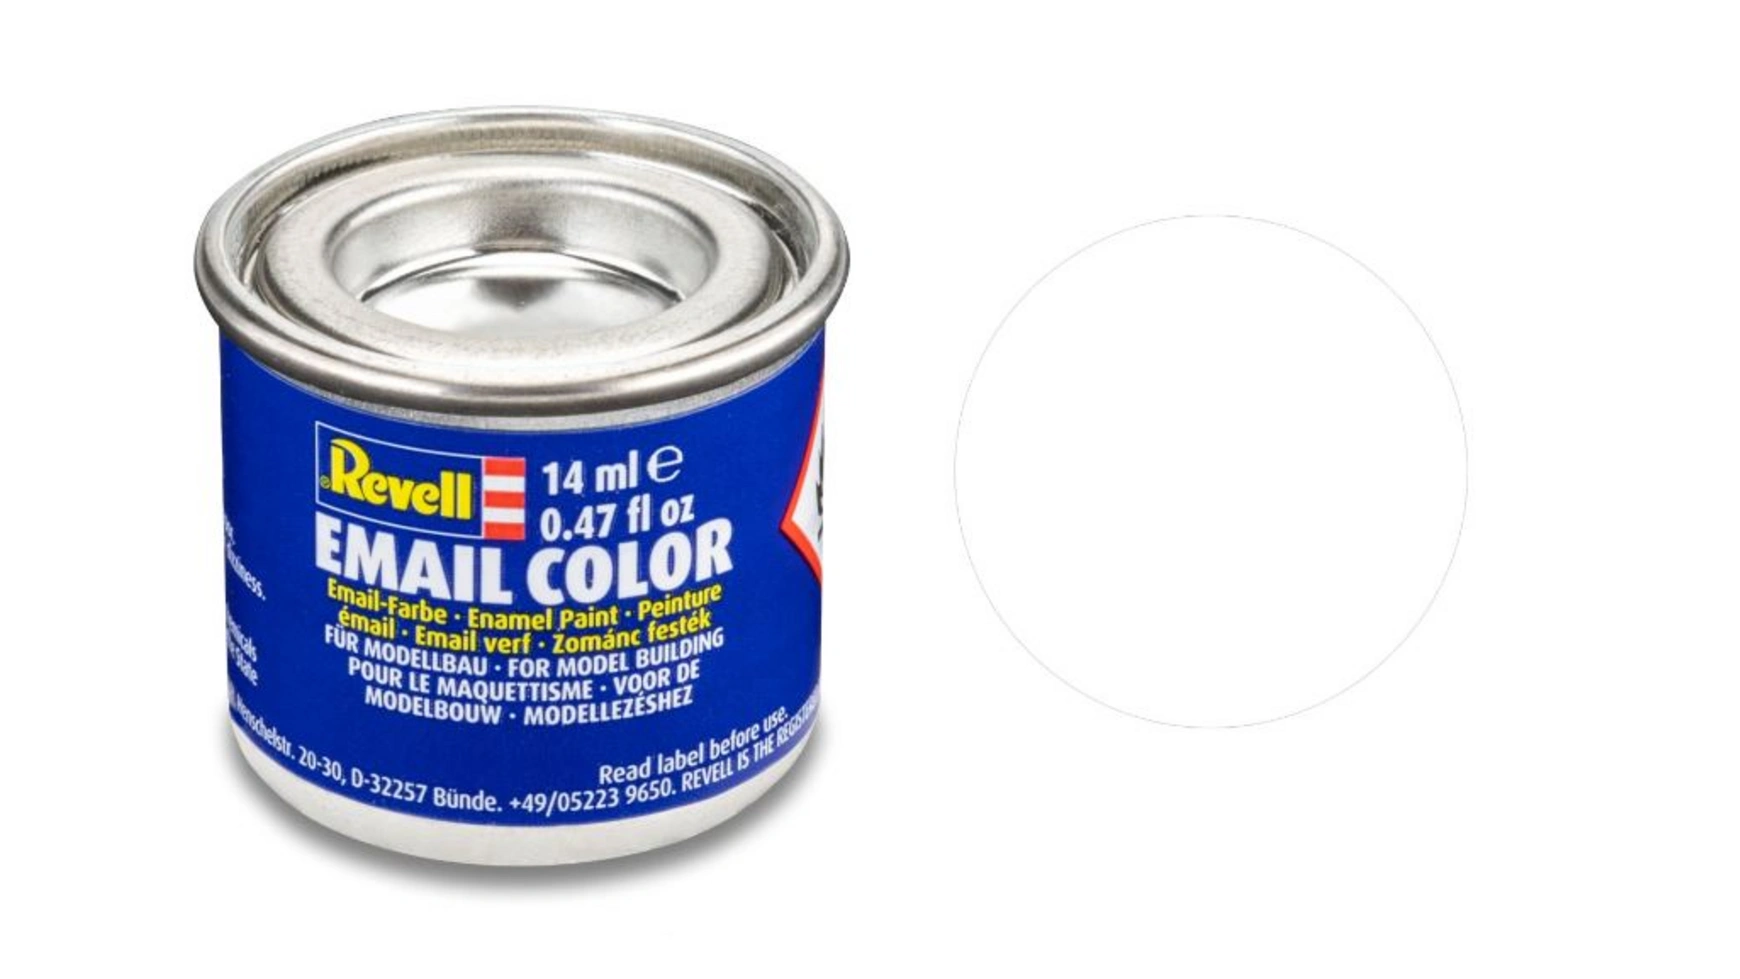 Revell Email Color Бесцветный, матовый, 14 мл